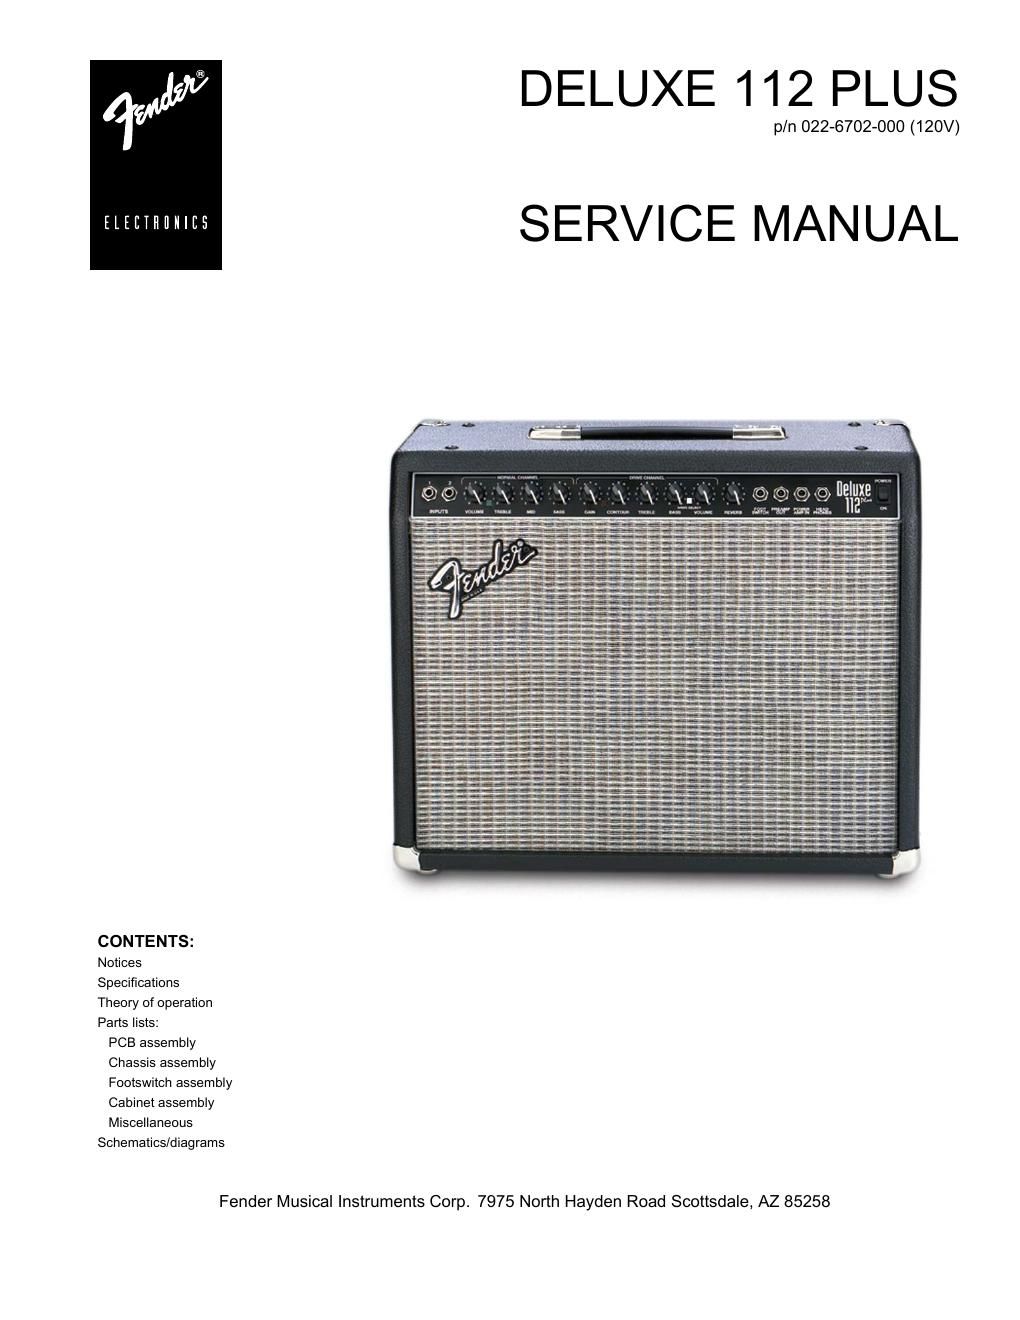 fender deluxe 112 plus service manual